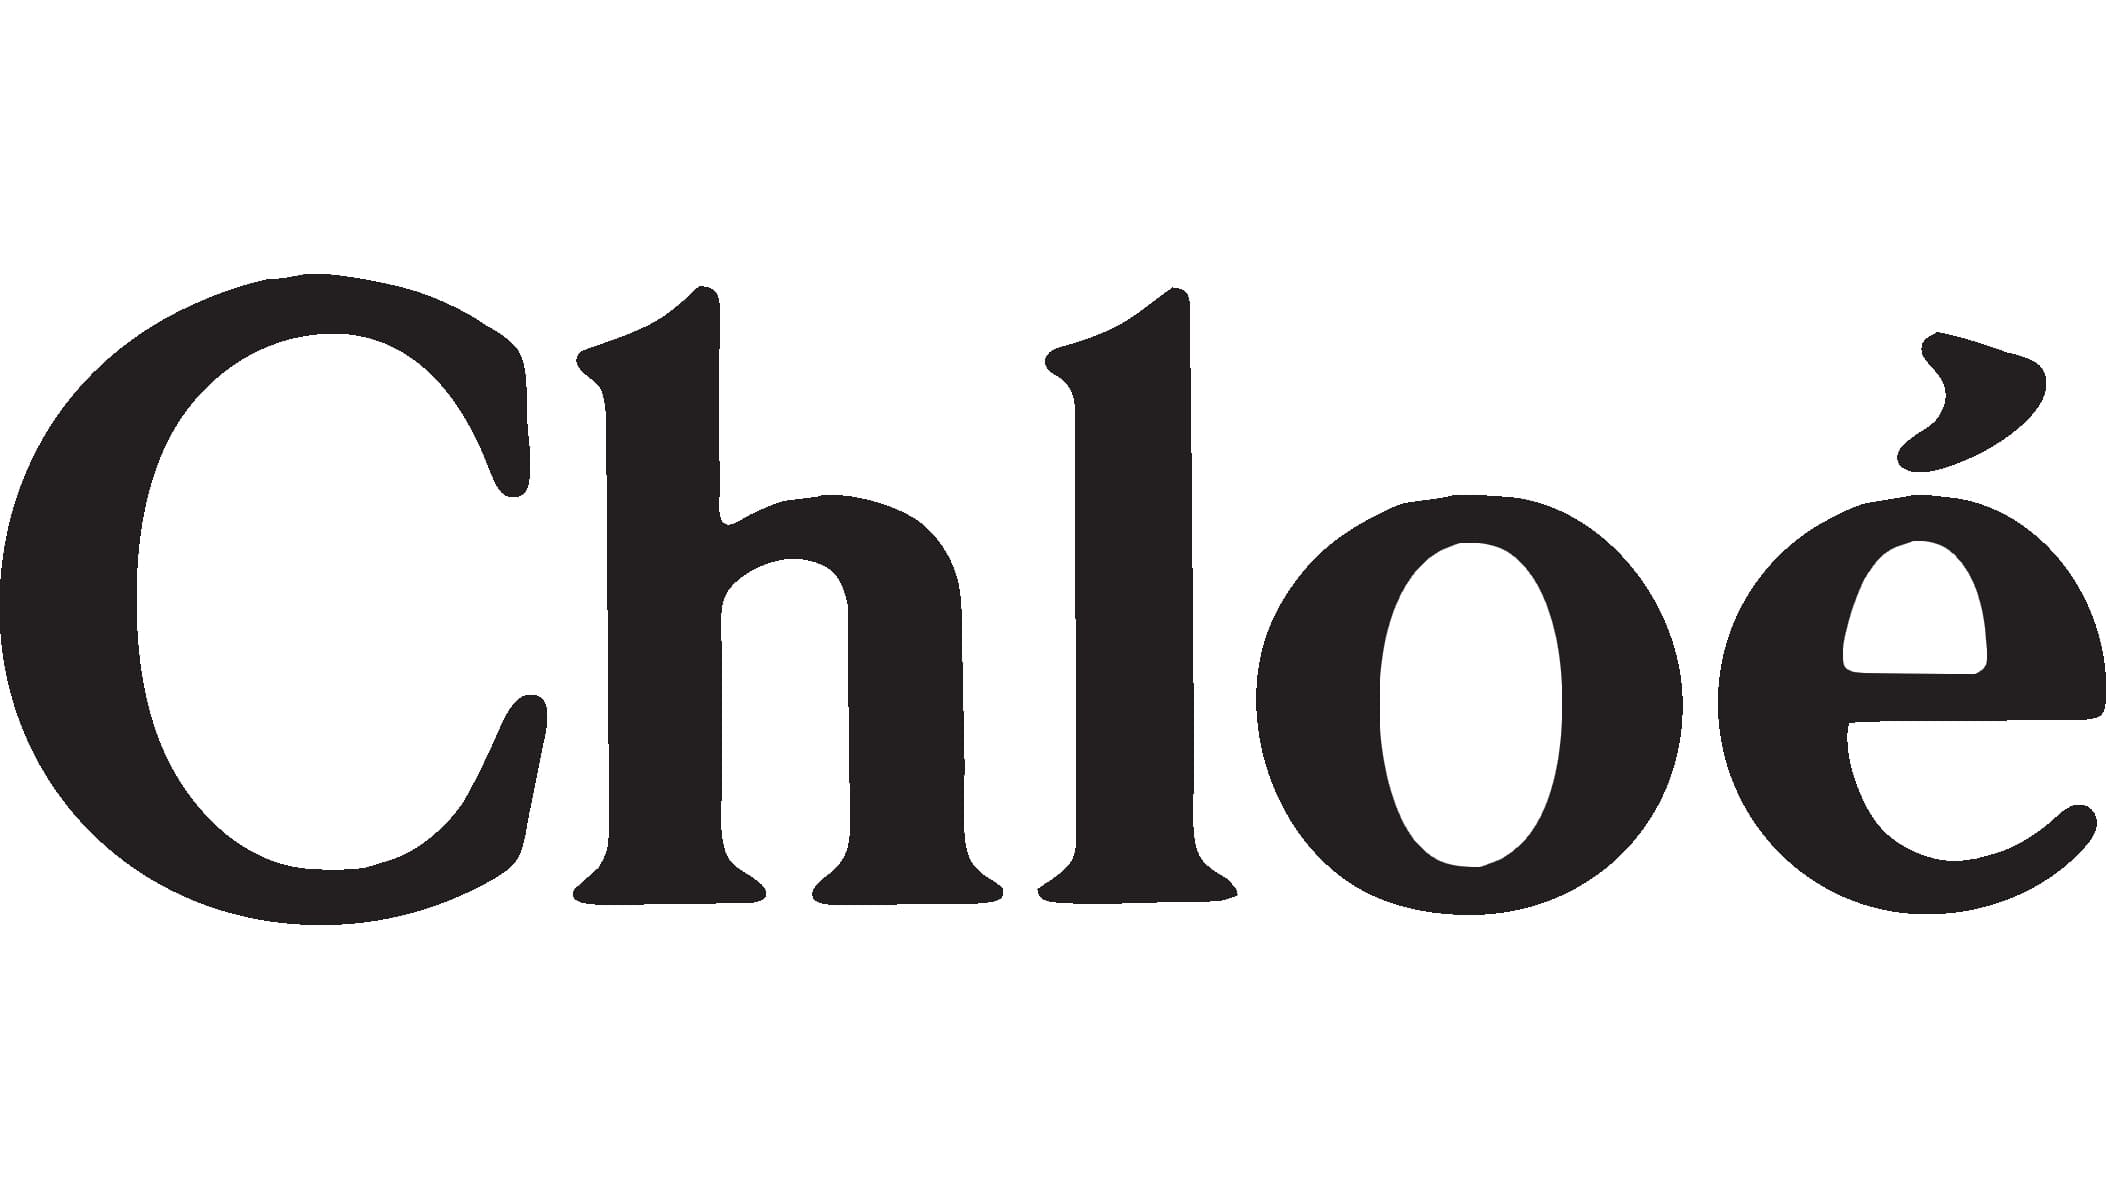 clothing chloe brand